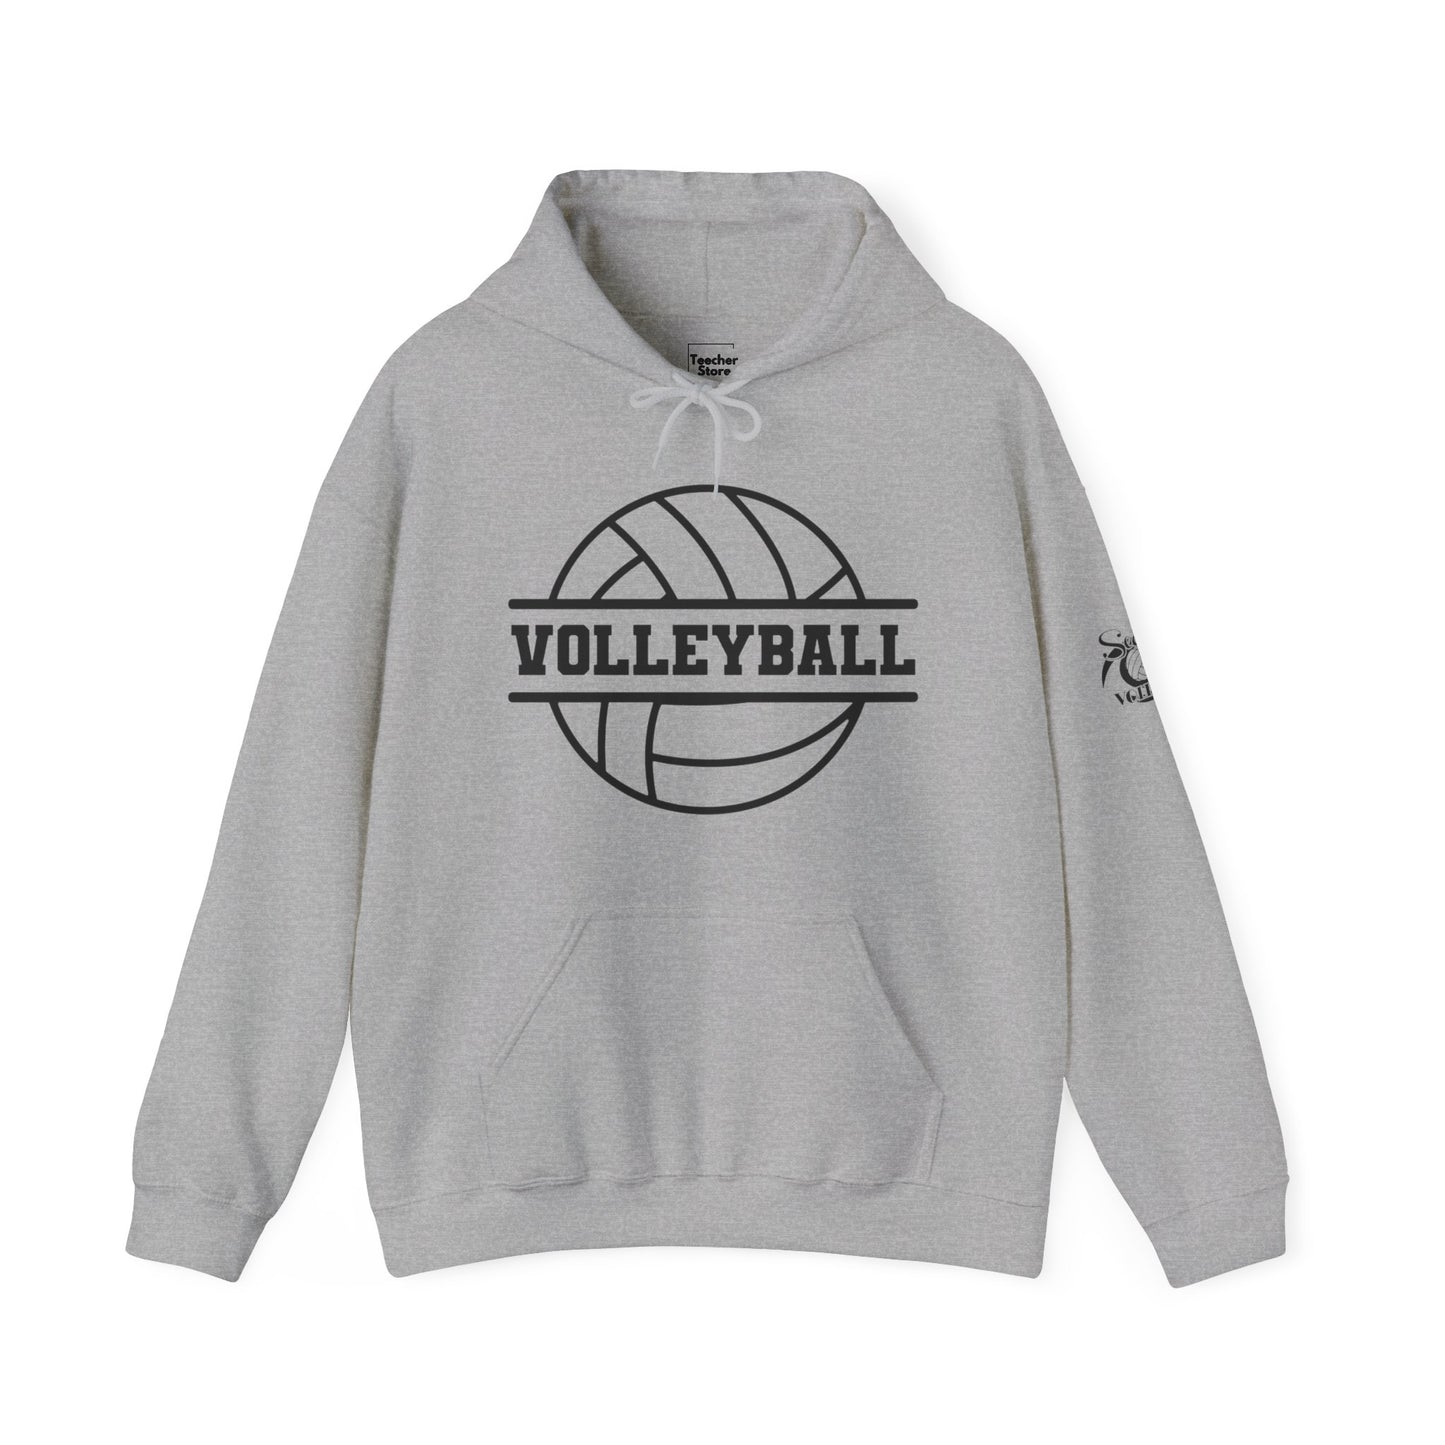 SS Volleyball Hooded Sweatshirt